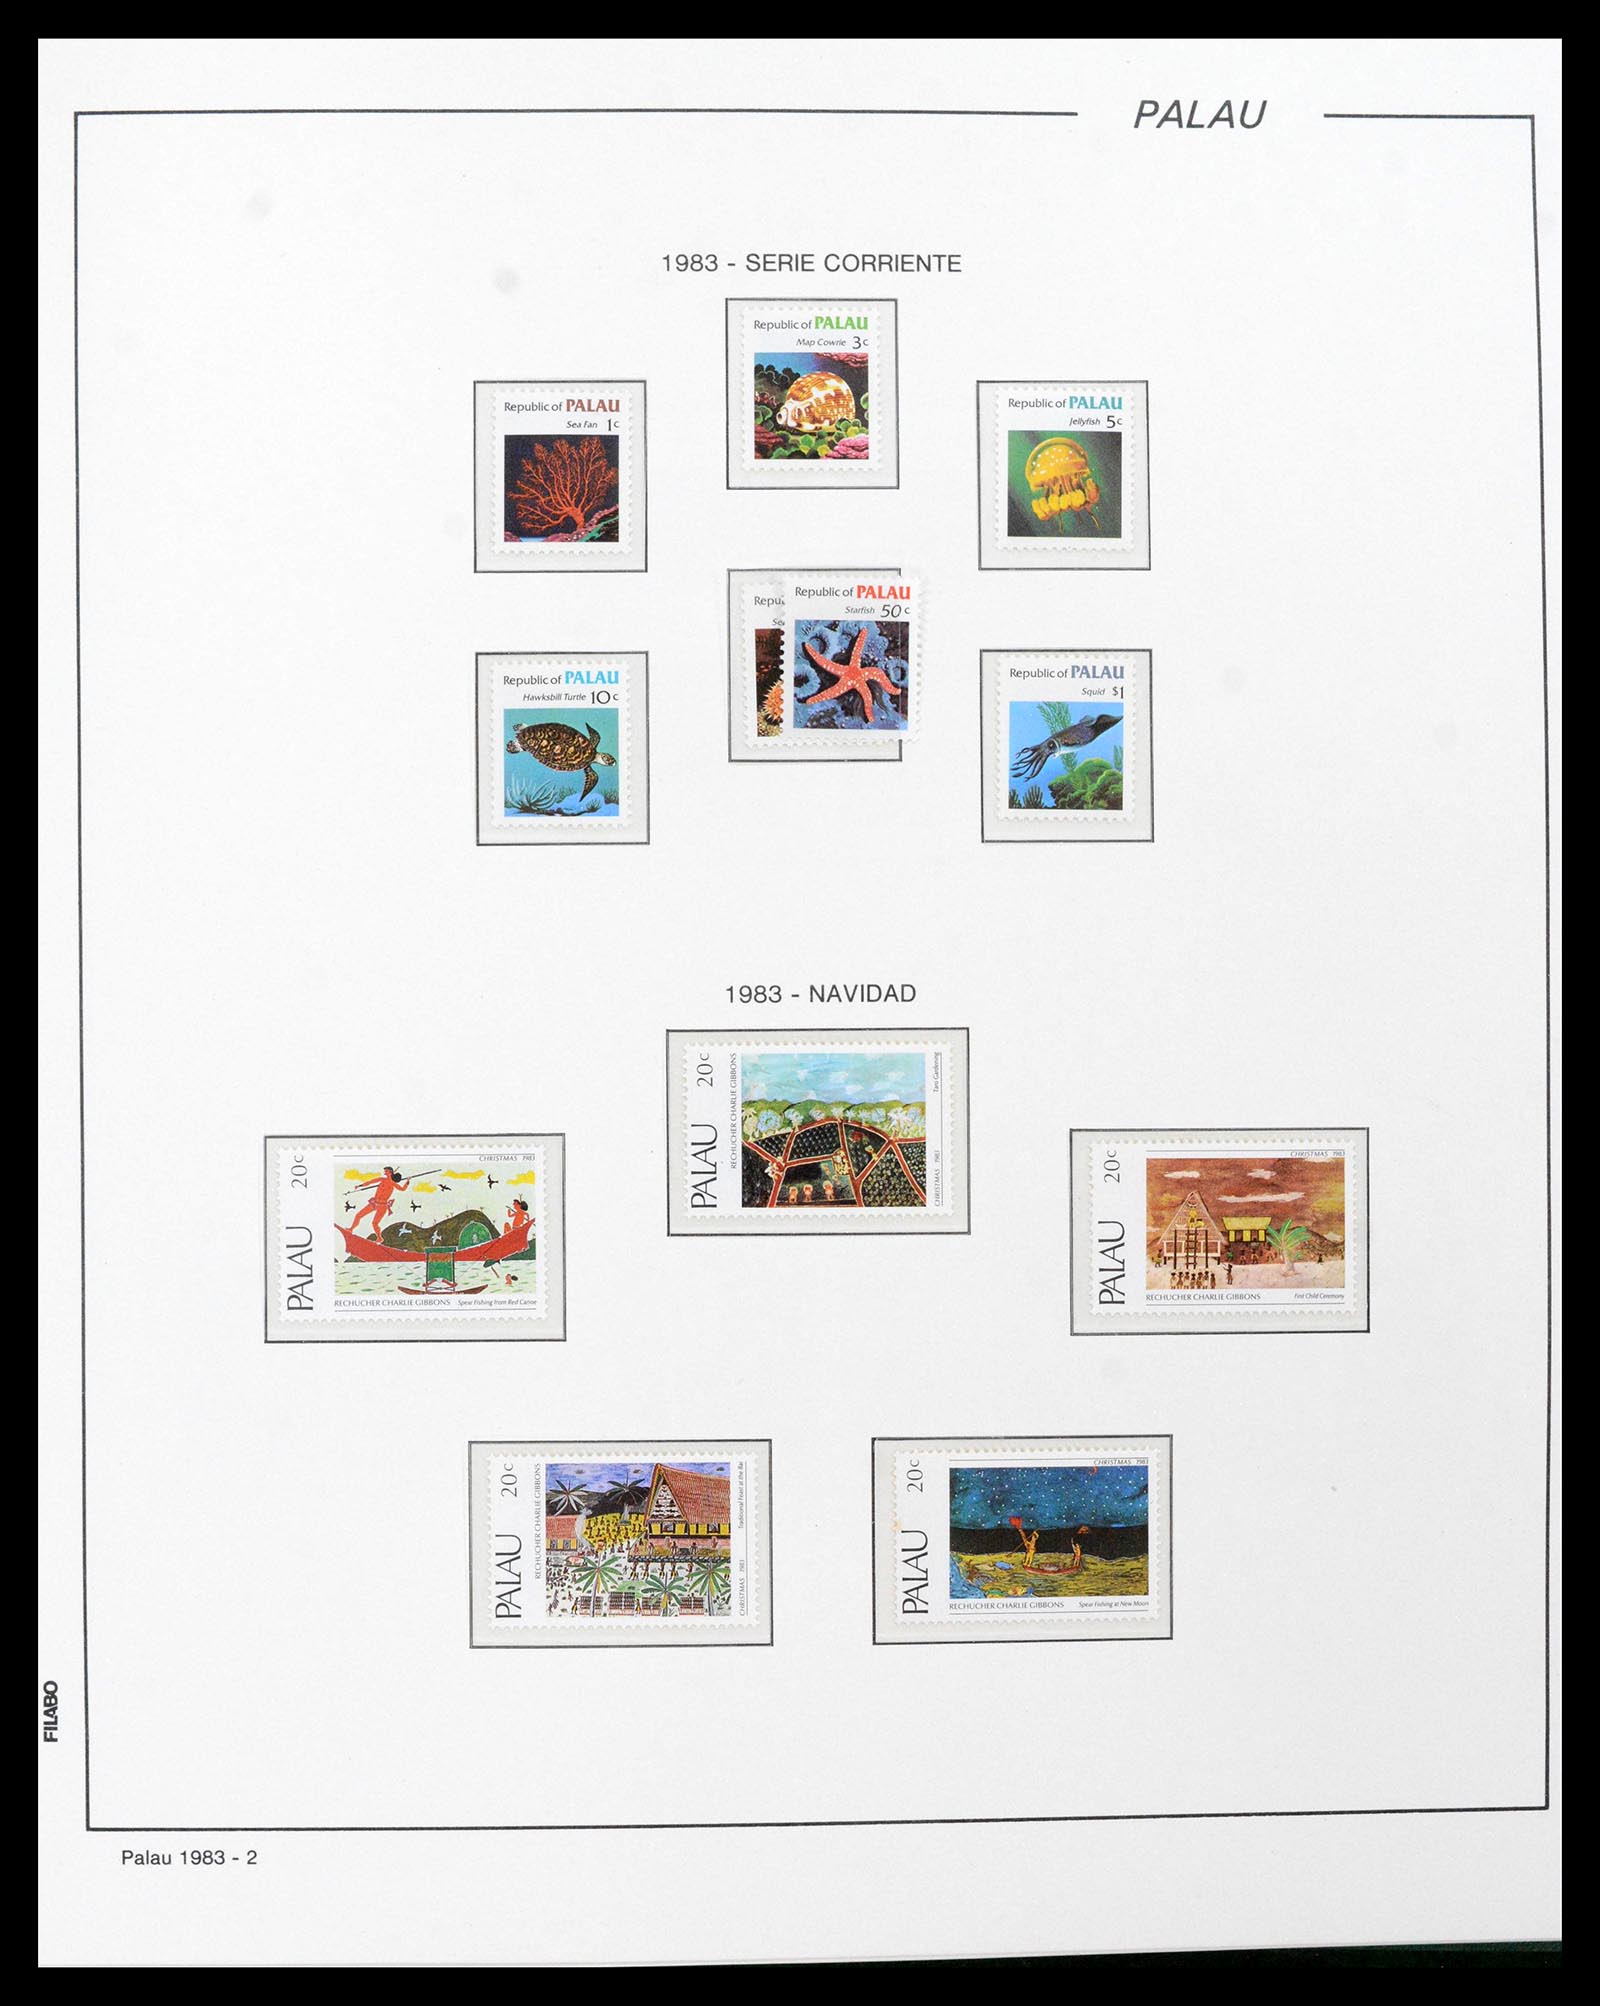 39222 0001 - Stamp collection 39222 Palau, Micronesia and Marshall islands 1980-1995.